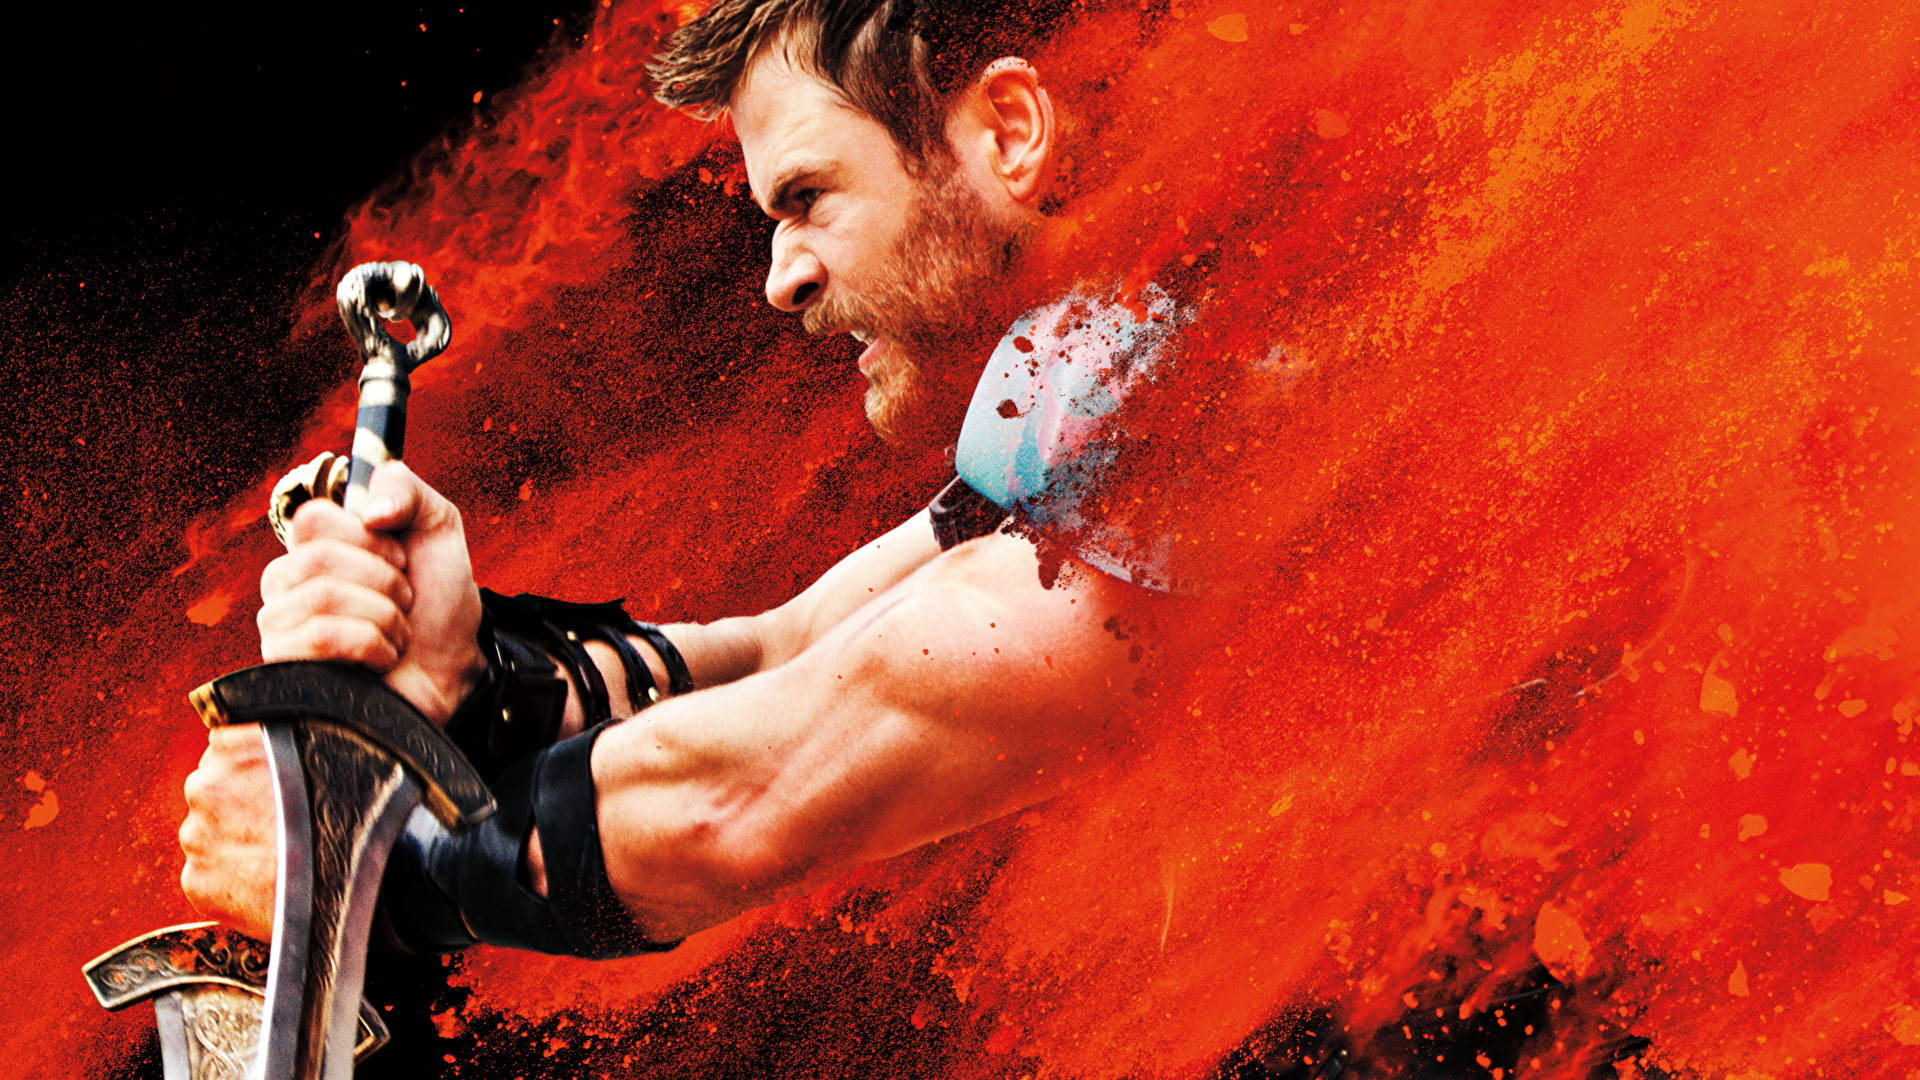 Chris Hemsworth portrayed as Marvel's legendary superhero, Thor Wallpaper